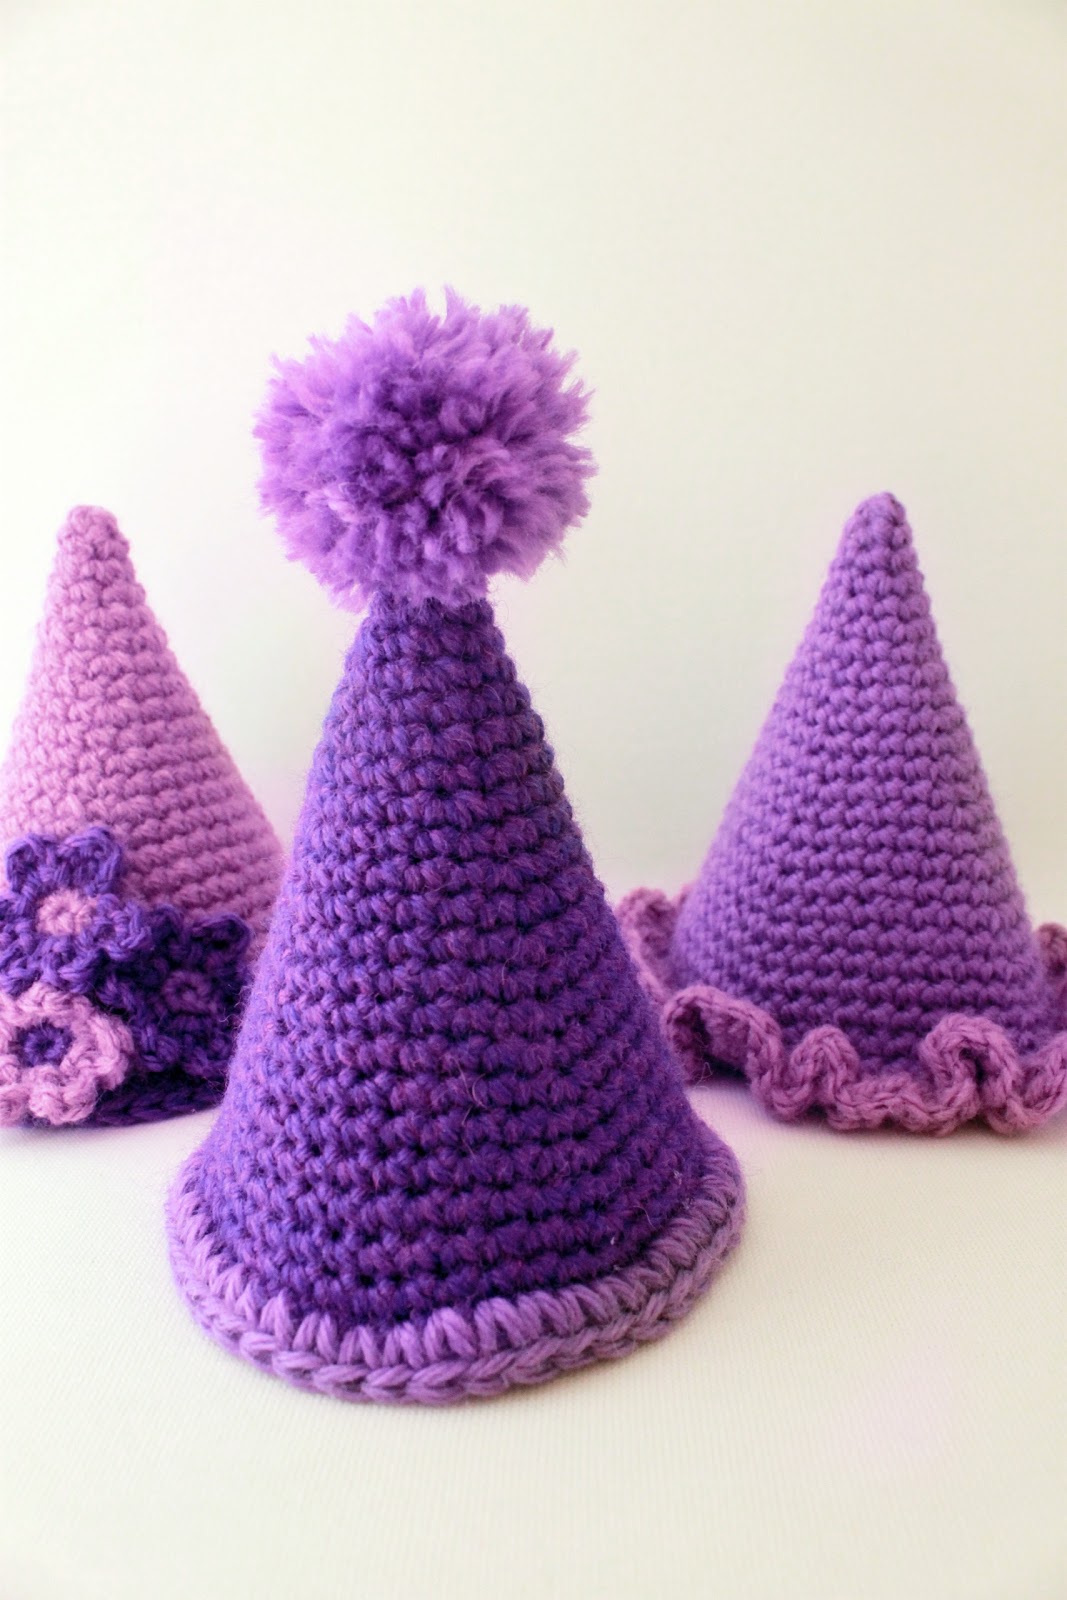 Beginner Crochet | FaveCrafts.com - Christmas Crafts, Free